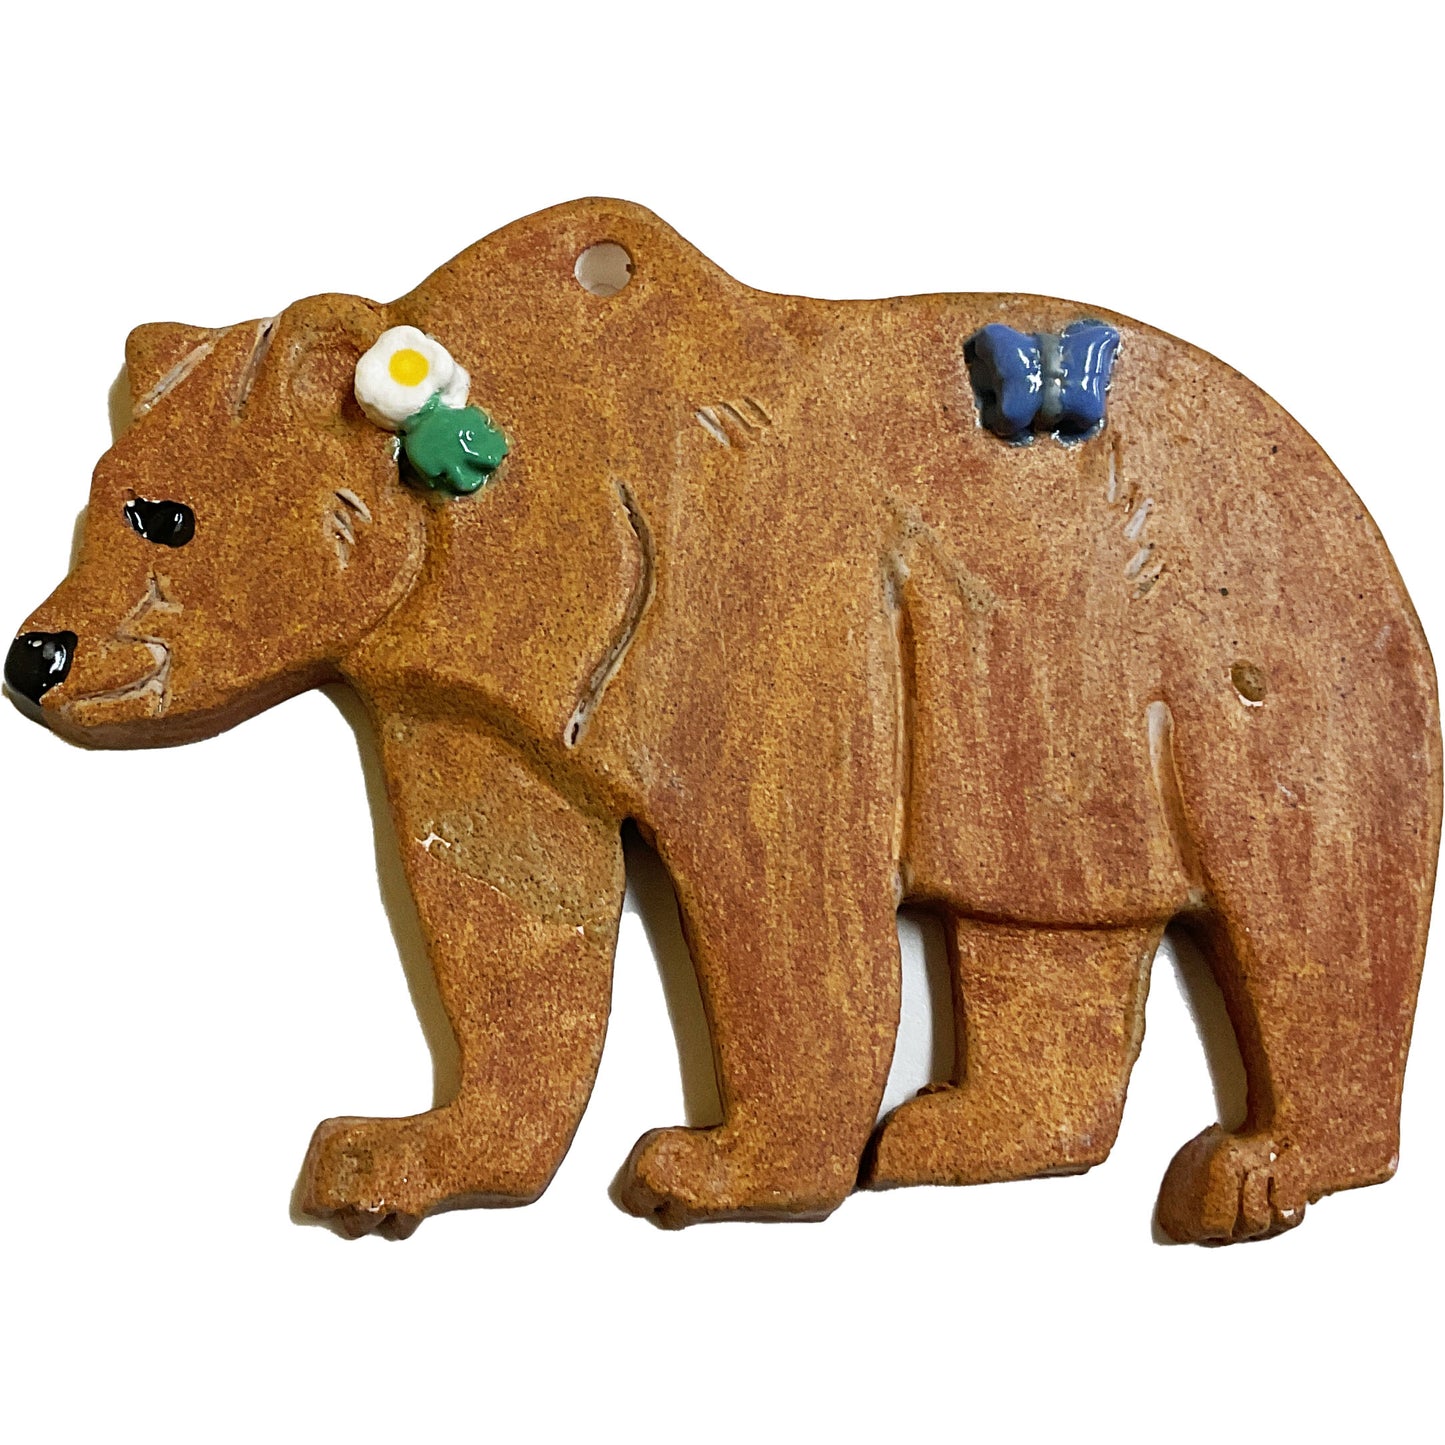 Ceramic Arts Handmade Clay Crafts 6-inch x 5-inch Glazed Bear by Lisa Uptain